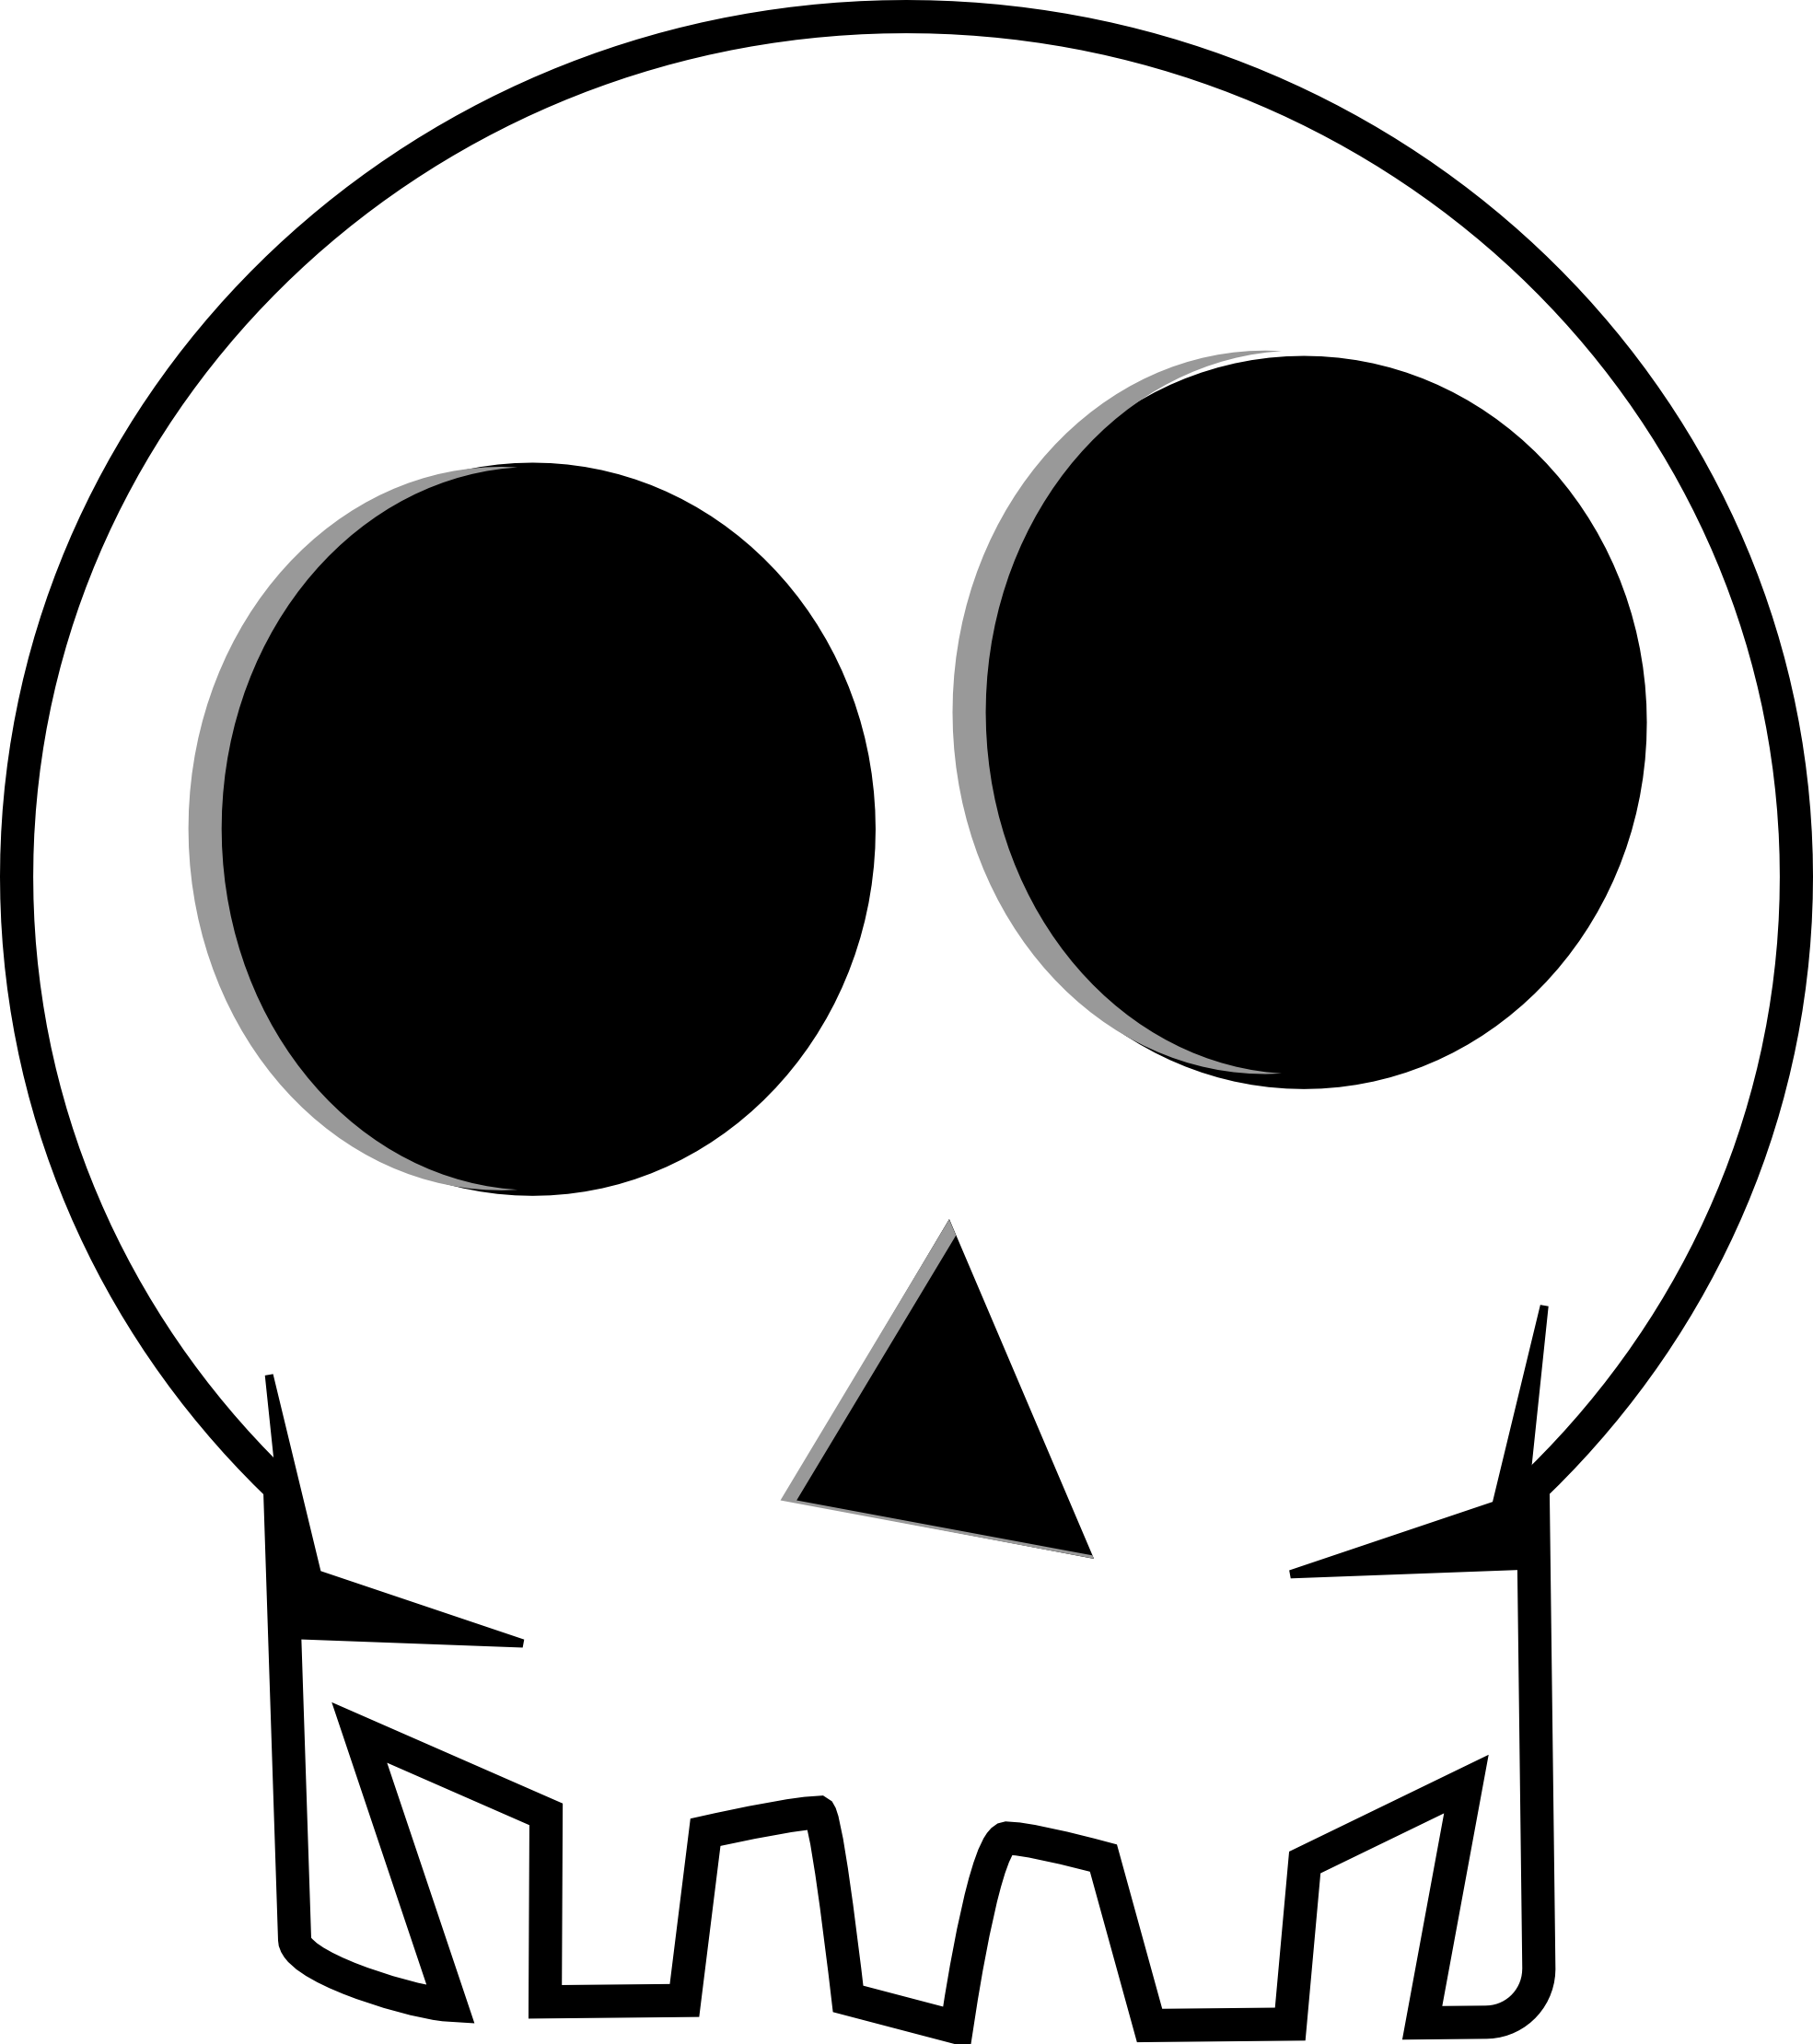 cartoon skull clip art is | Clipart Panda - Free Clipart Images